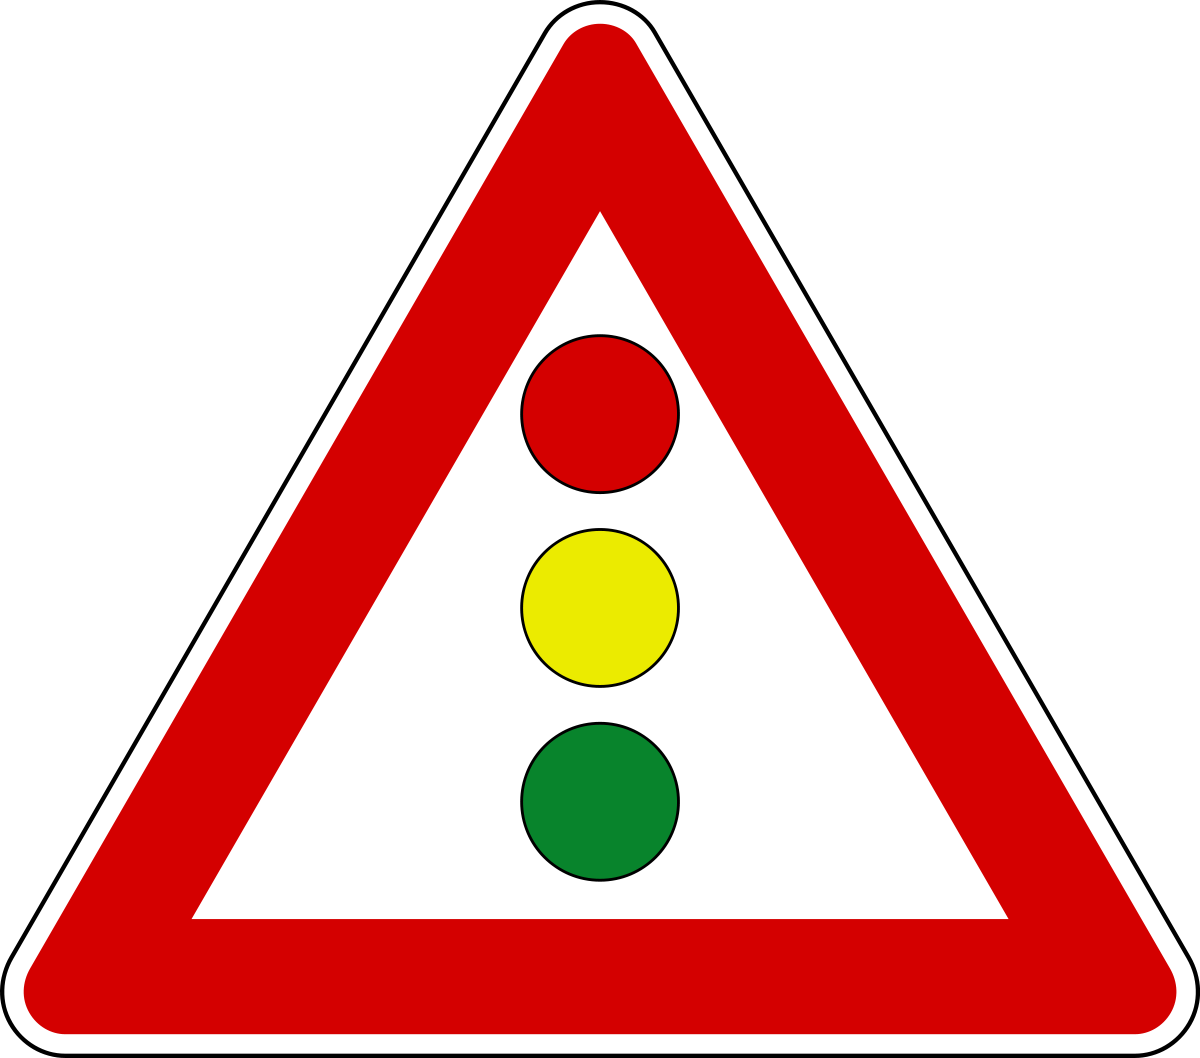 File:Italian traffic signs - semaforo verticale.svg - Wikimedia Commons